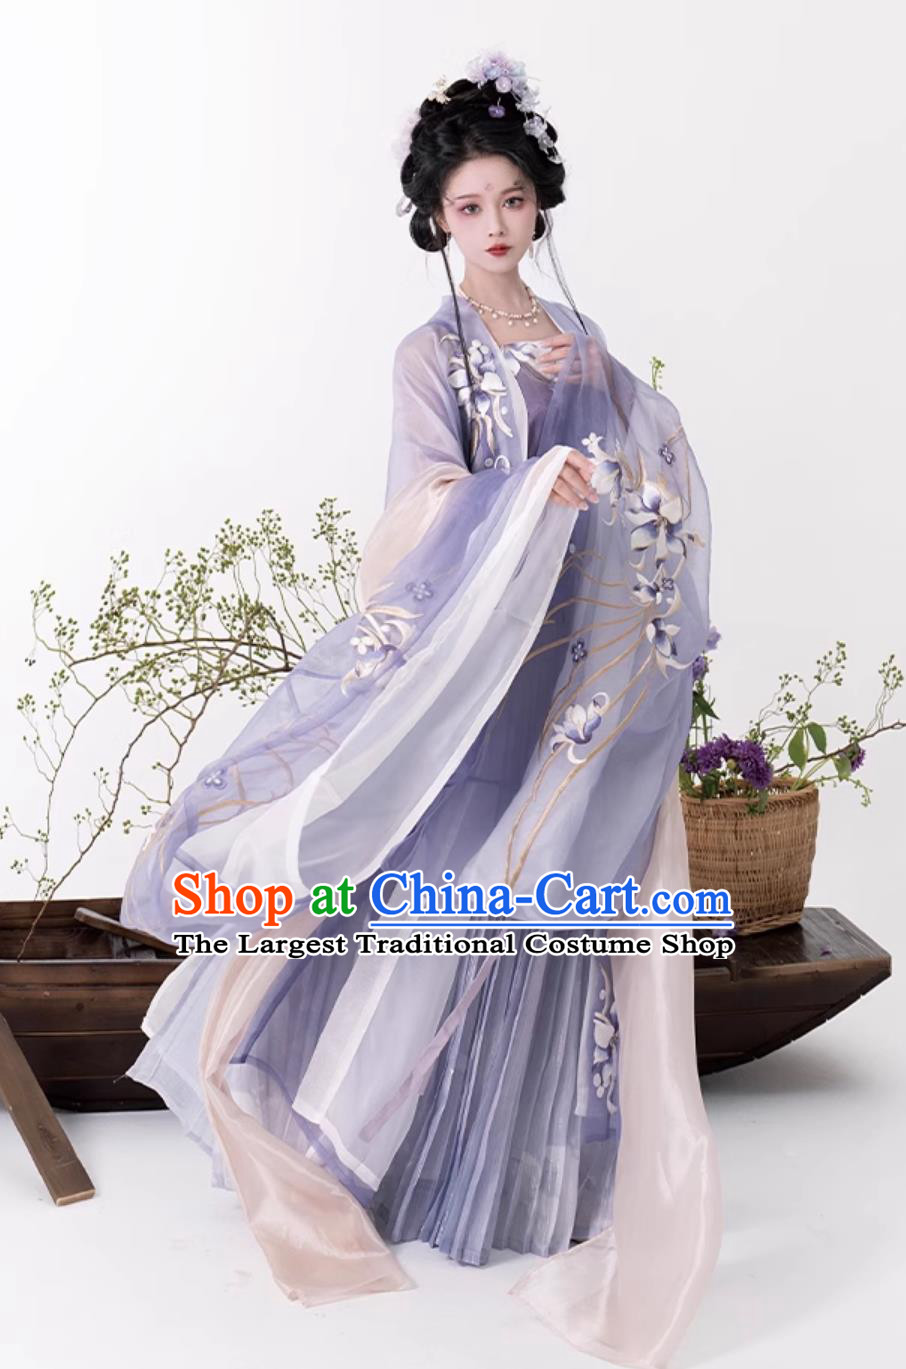 China Ancient Princess Clothing Traditional Hanfu Song Dynasty Woman Purple Dress